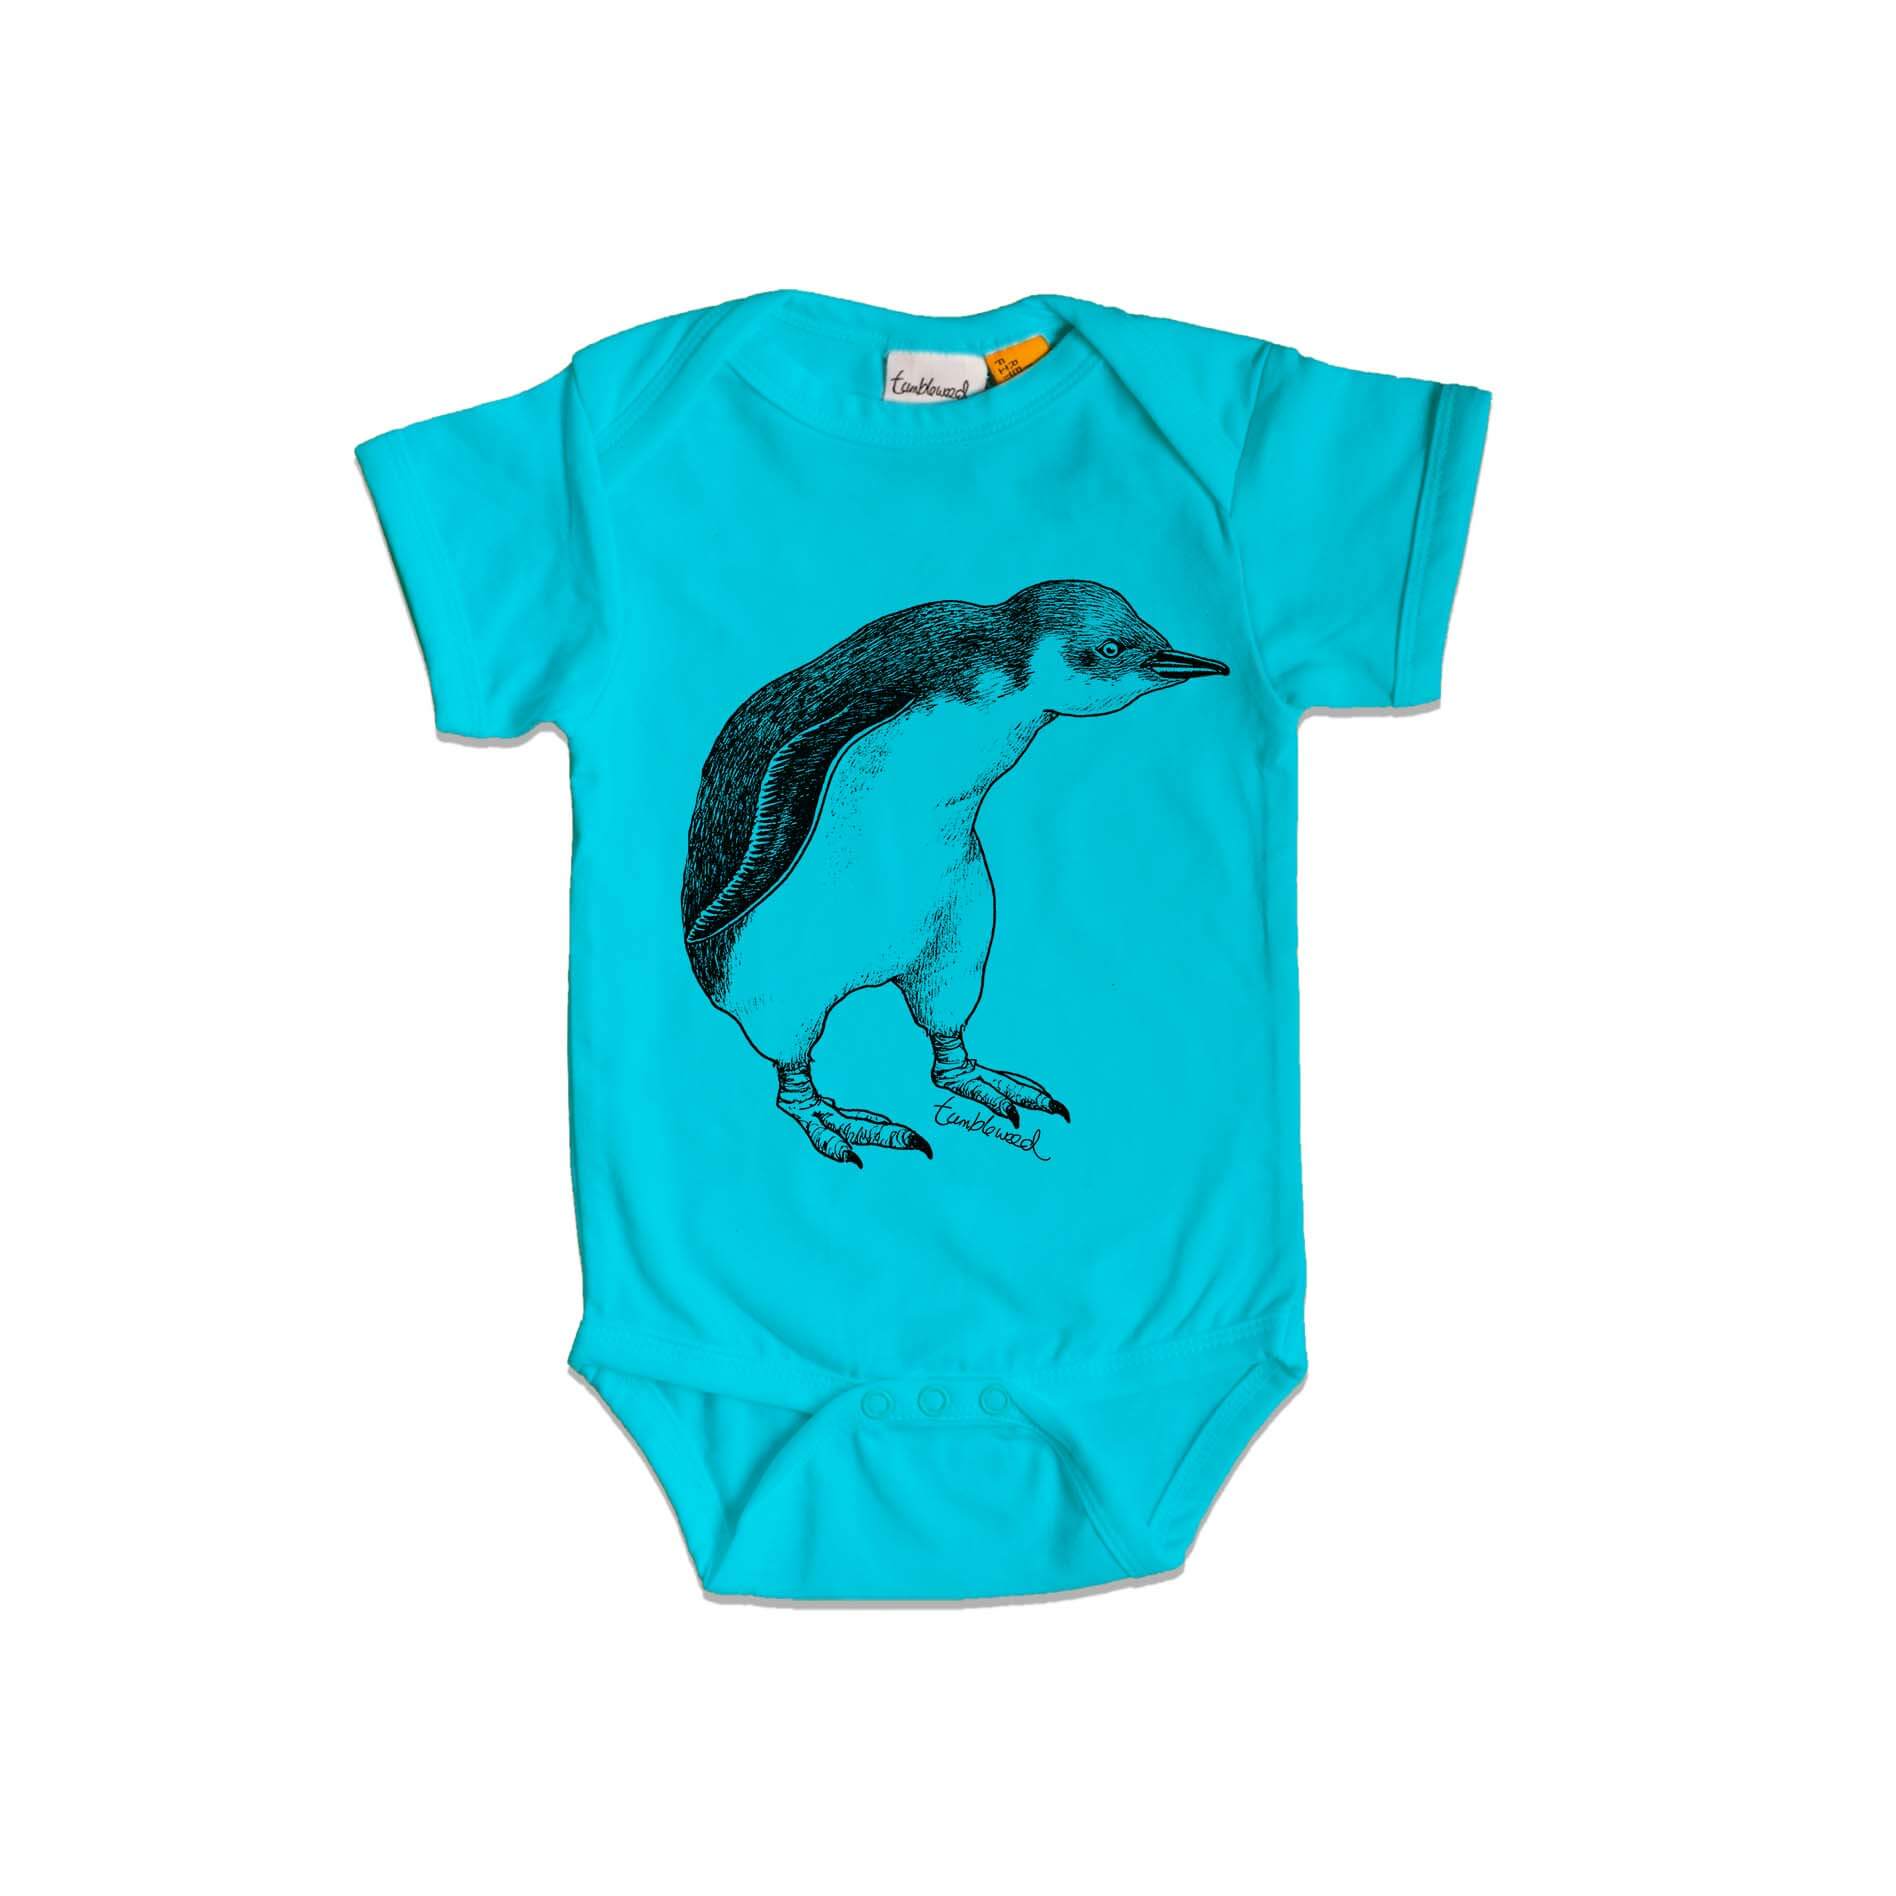 Short sleeved, blue, organic cotton, baby onesie featuring a screen printed Little Blue Penguin design.
 design.